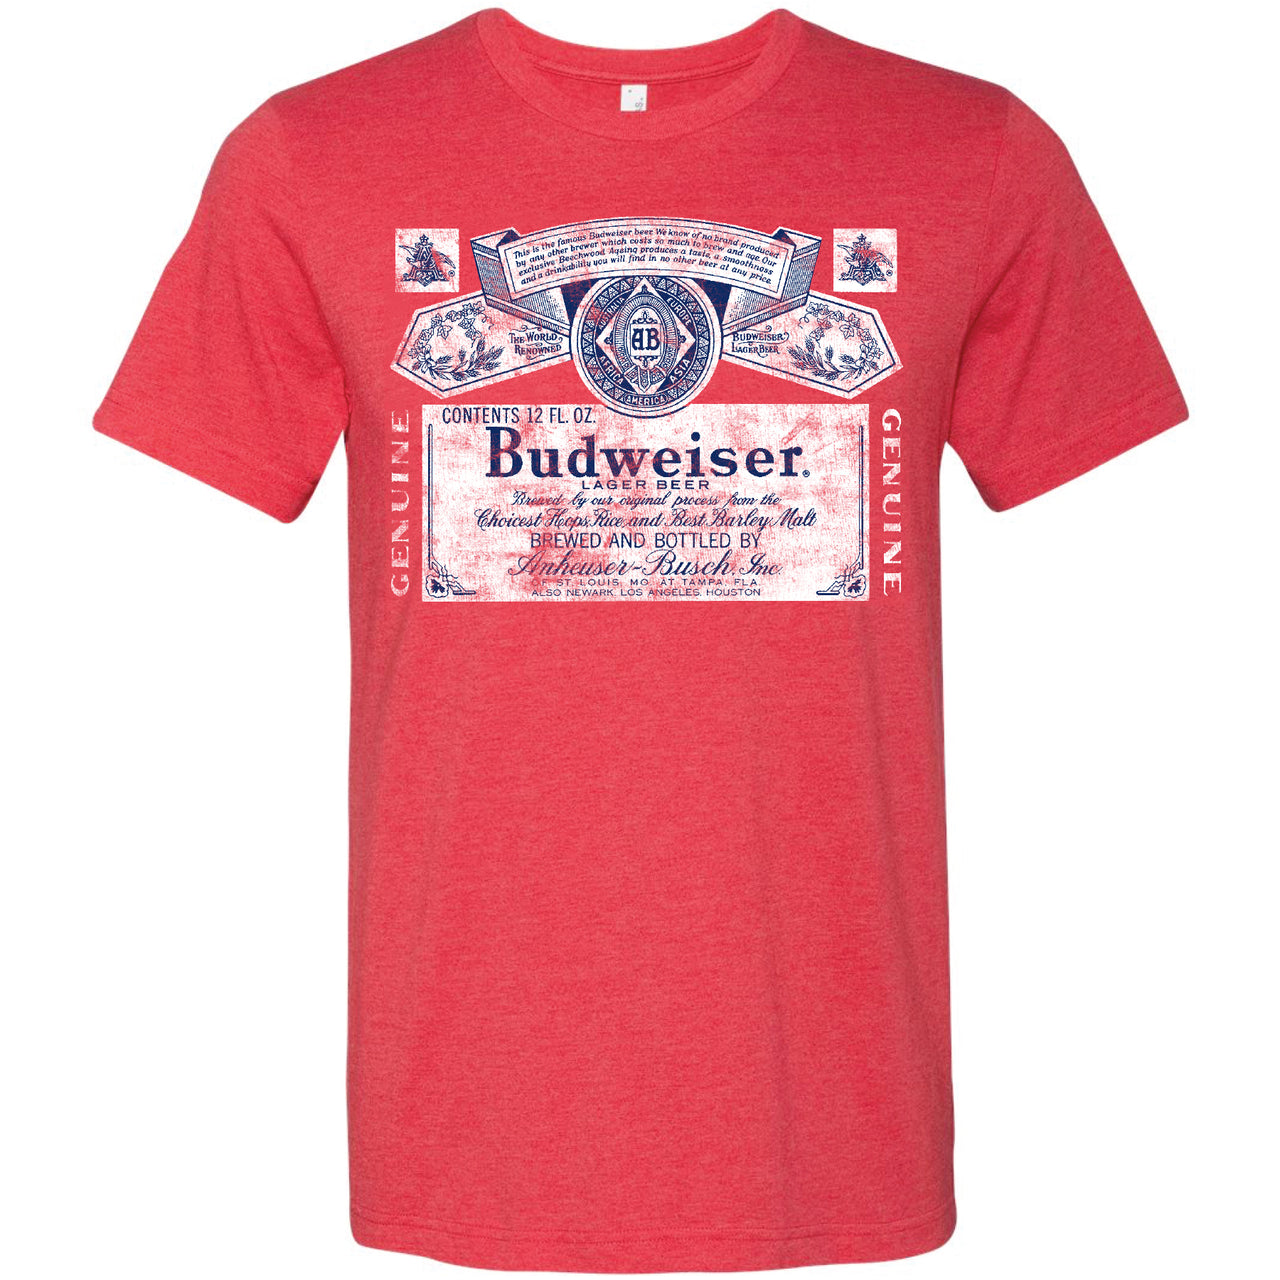 Budweiser - Vintage 1966 Distressed Label T-Shirt